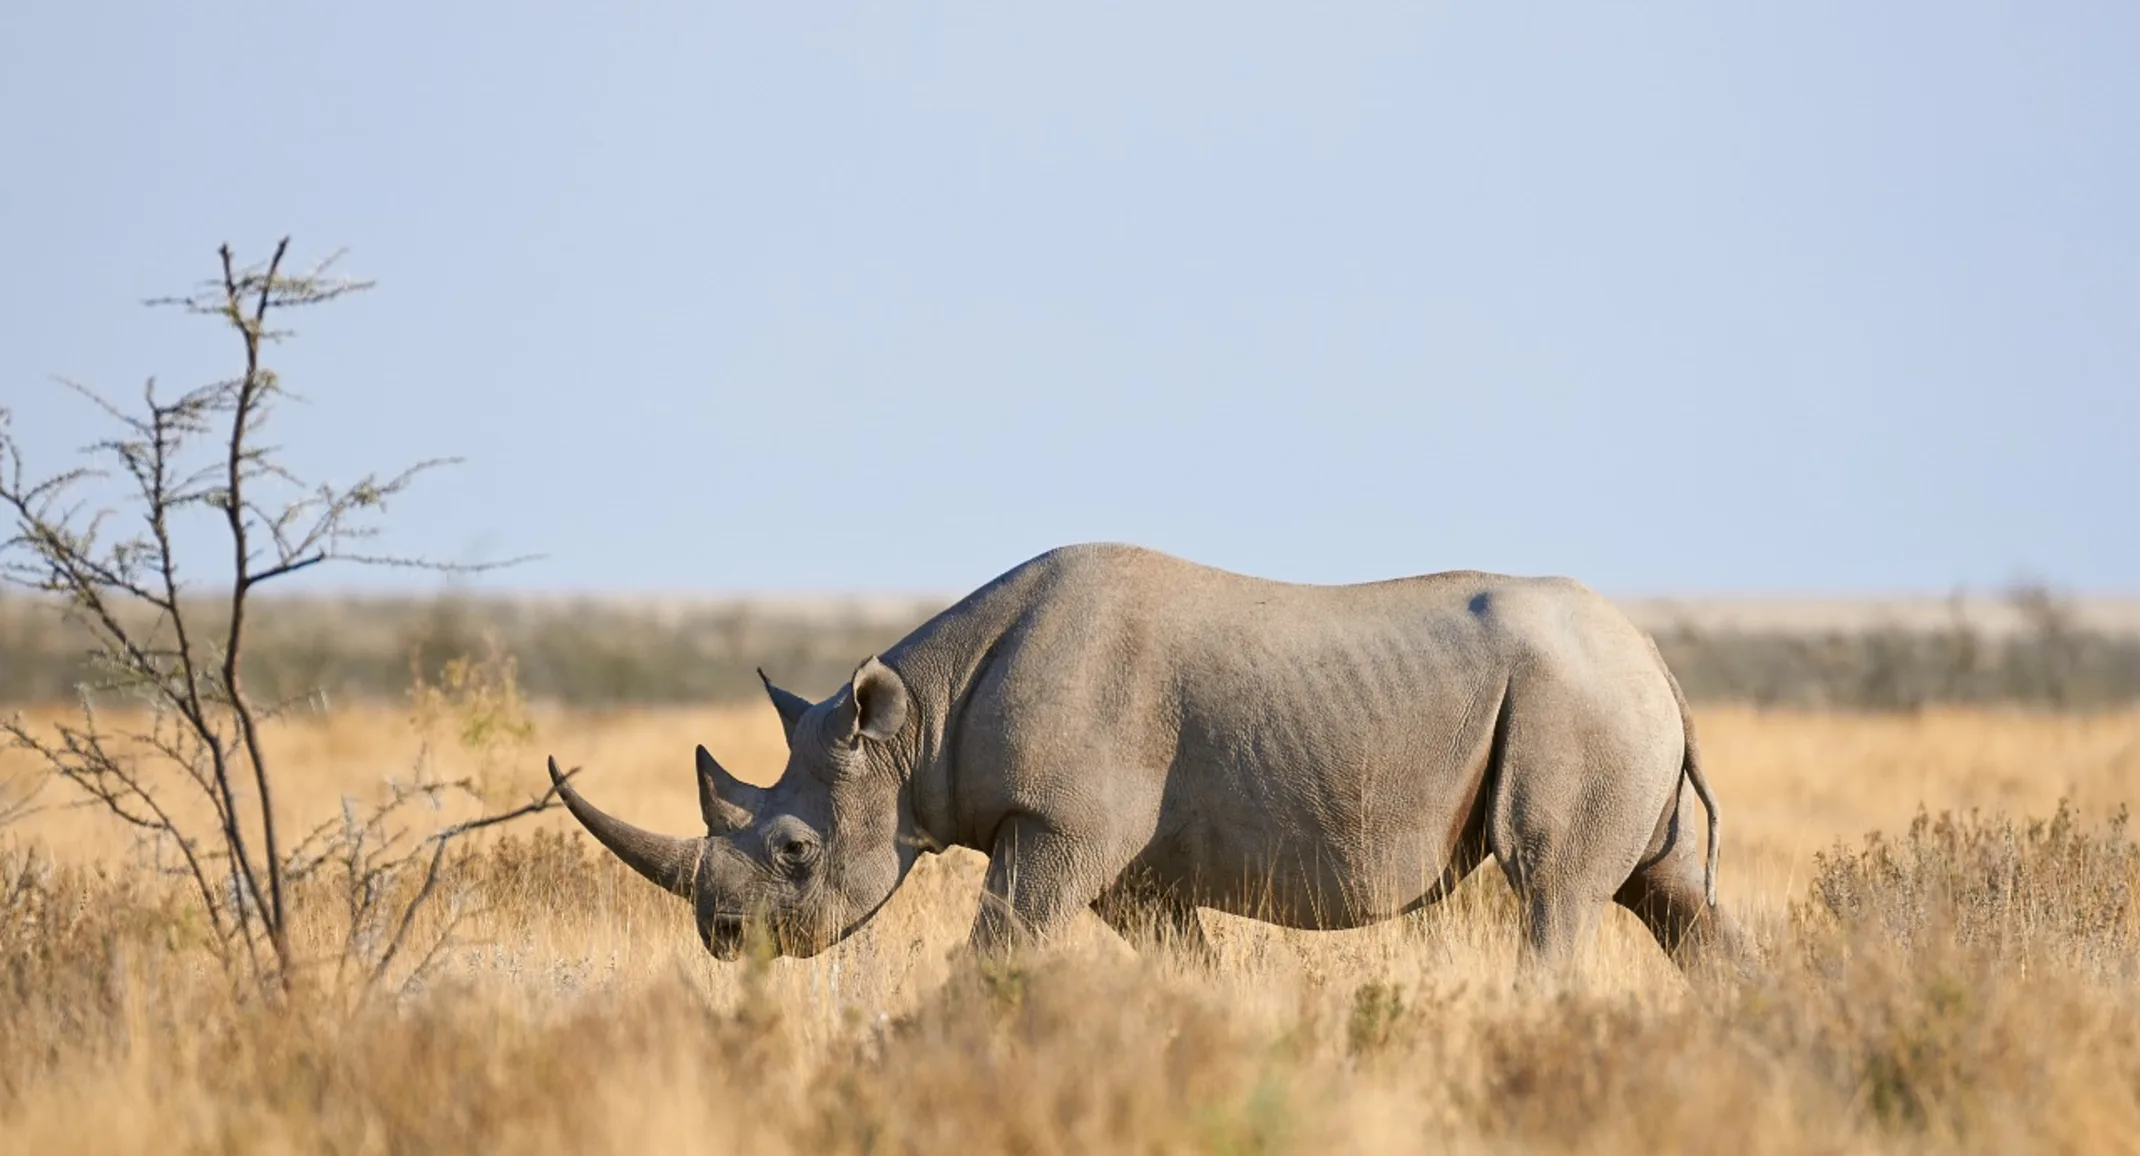 Rhino in its natural habitat.